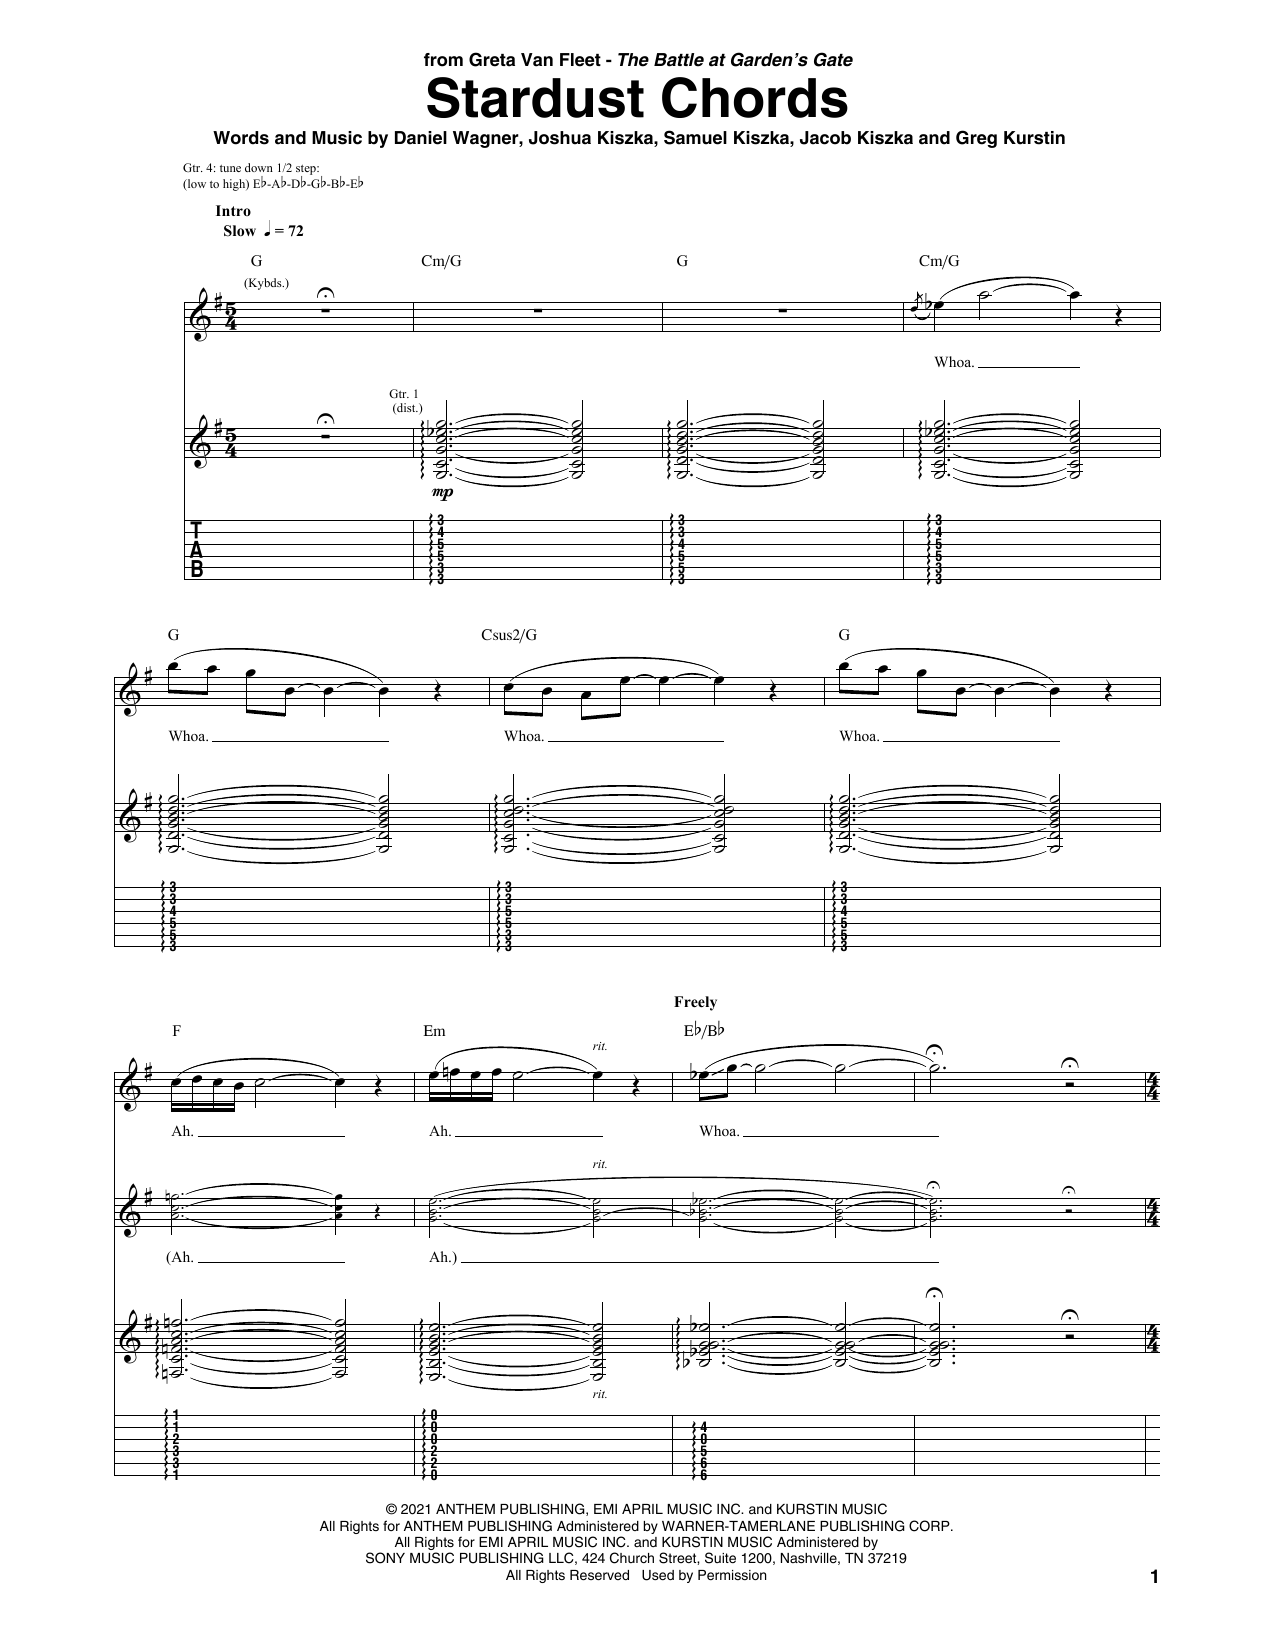 Greta Van Fleet Stardust Chords Sheet Music Notes & Chords for Guitar Tab - Download or Print PDF